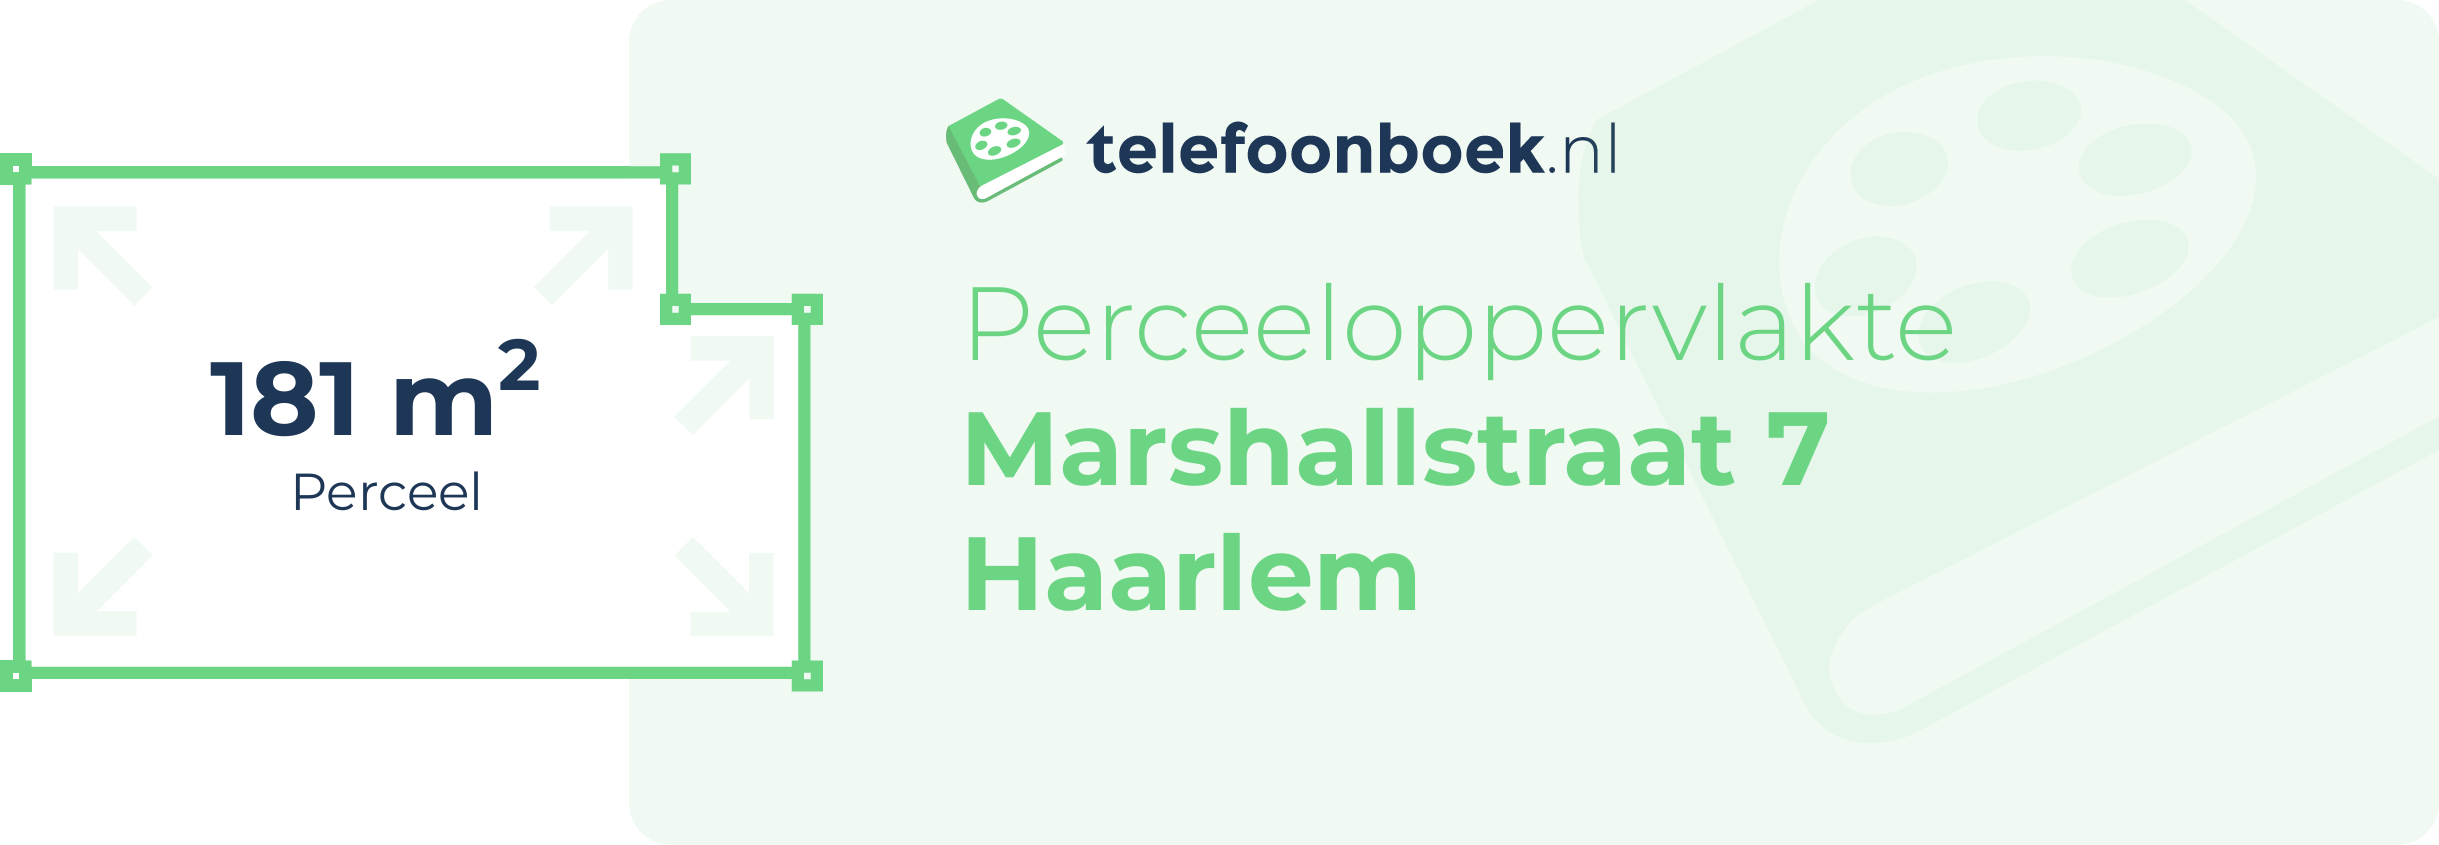 Perceeloppervlakte Marshallstraat 7 Haarlem